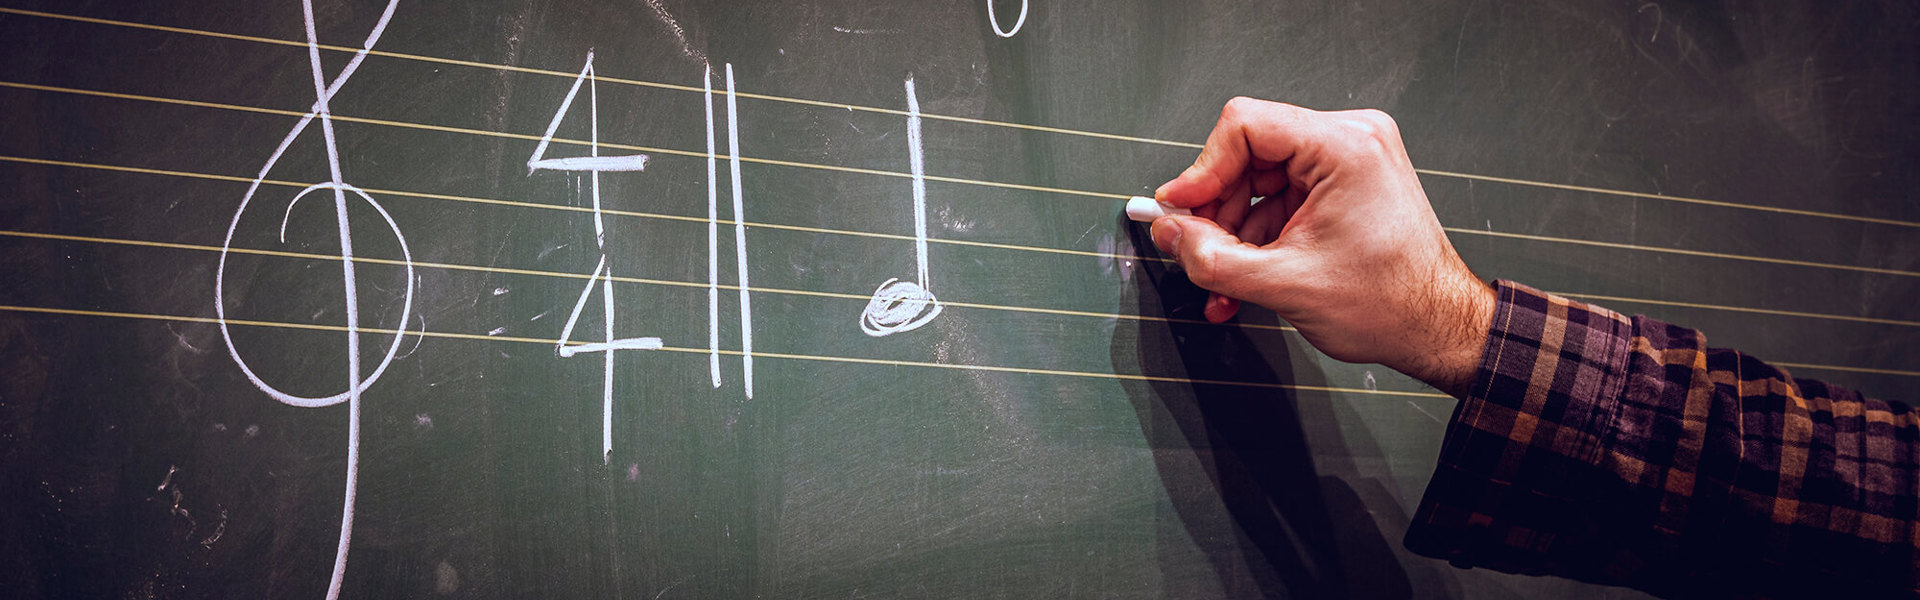 A man writing a musical score on a blackboard